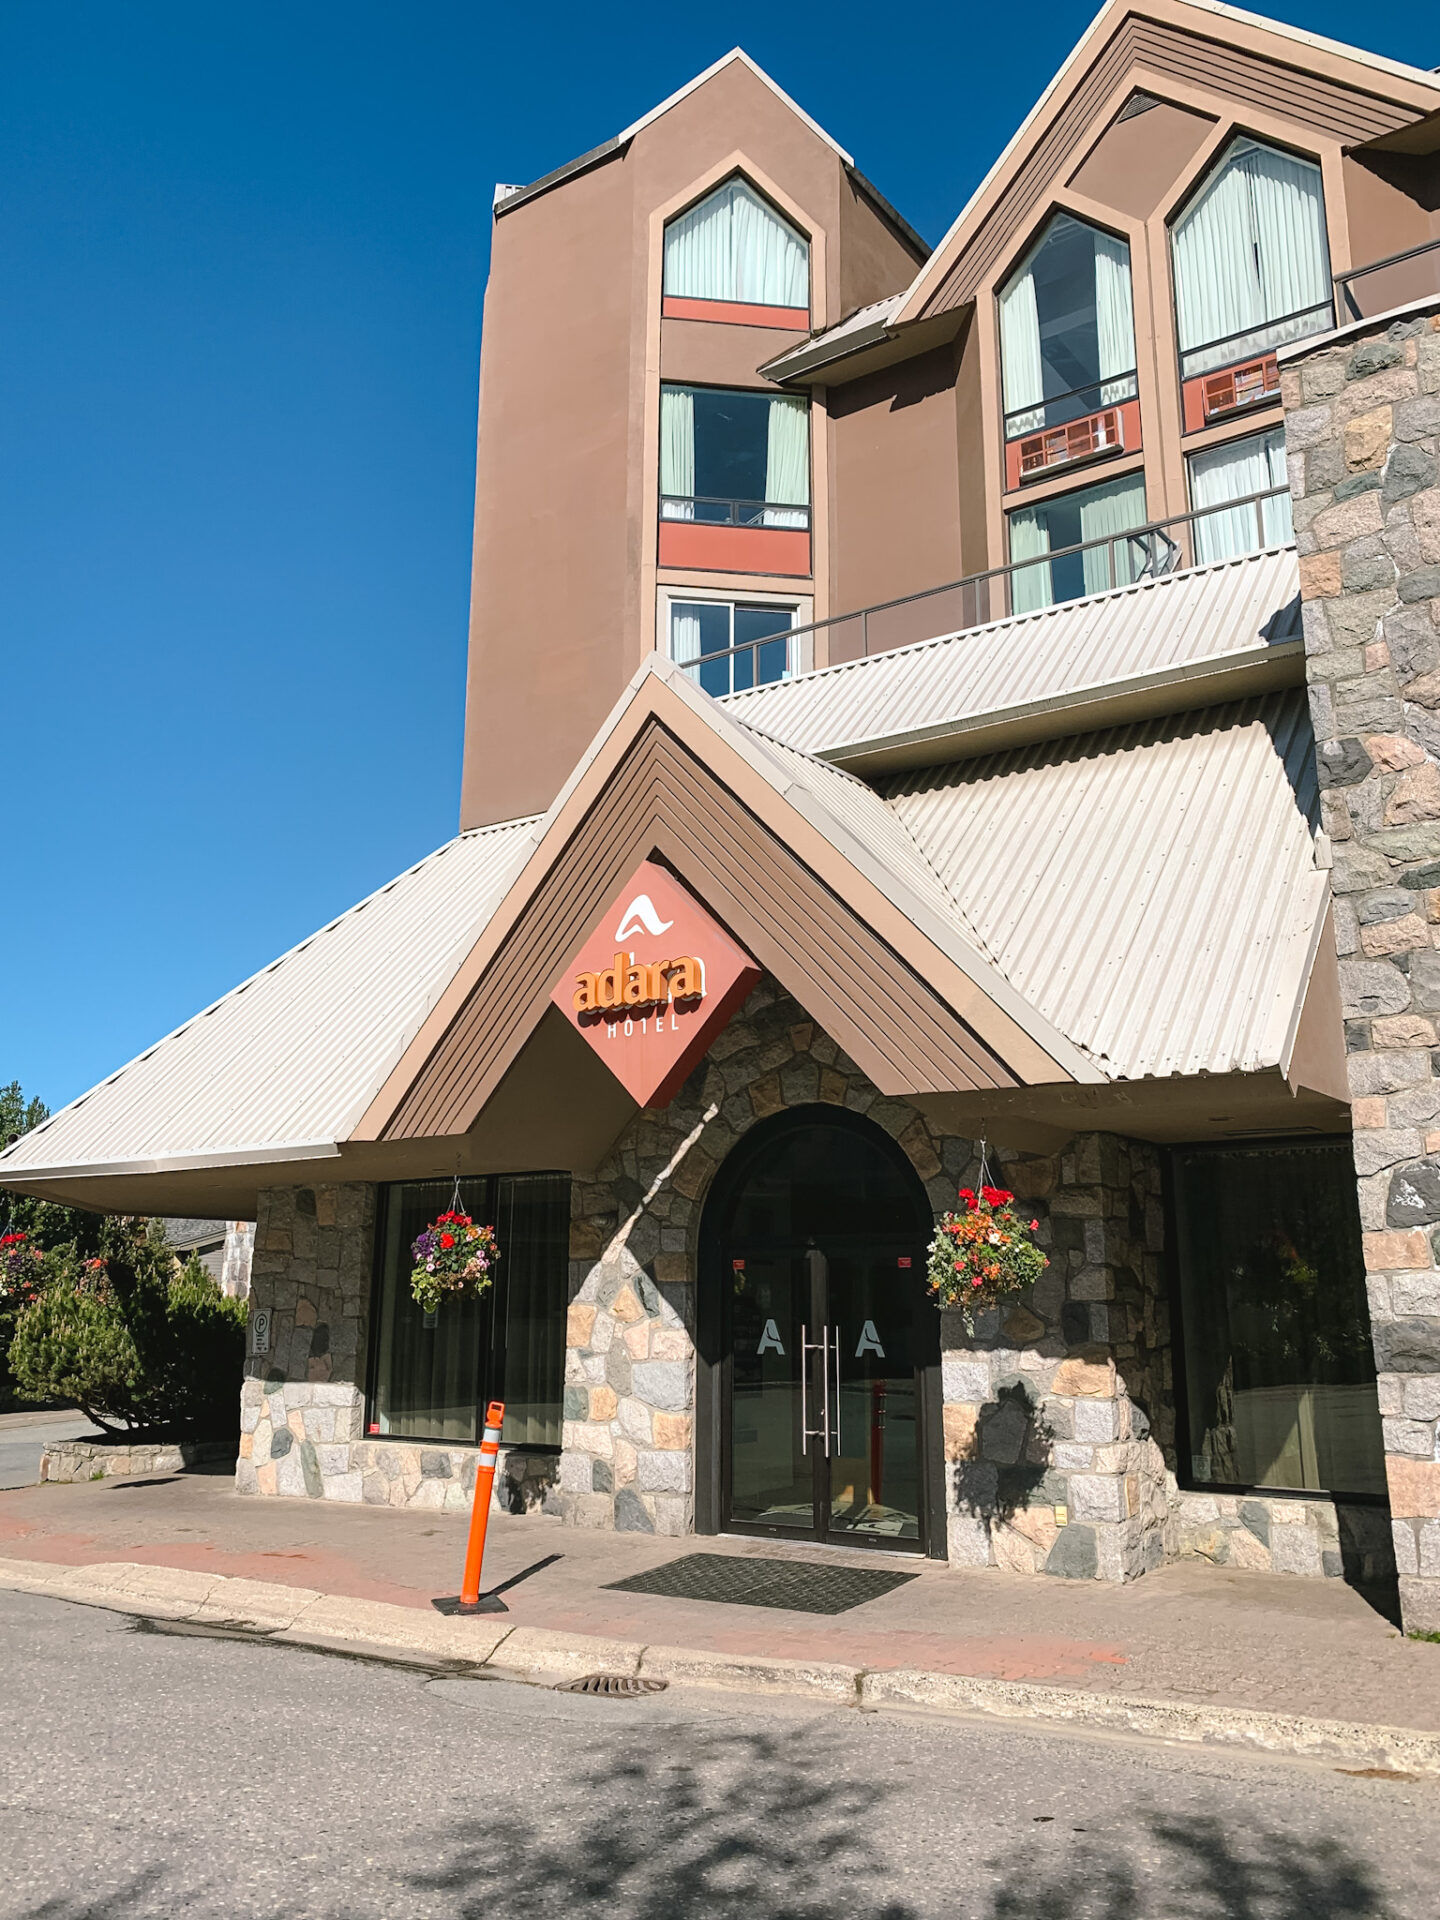 The Adara Hotel in Whistler, British Columbia